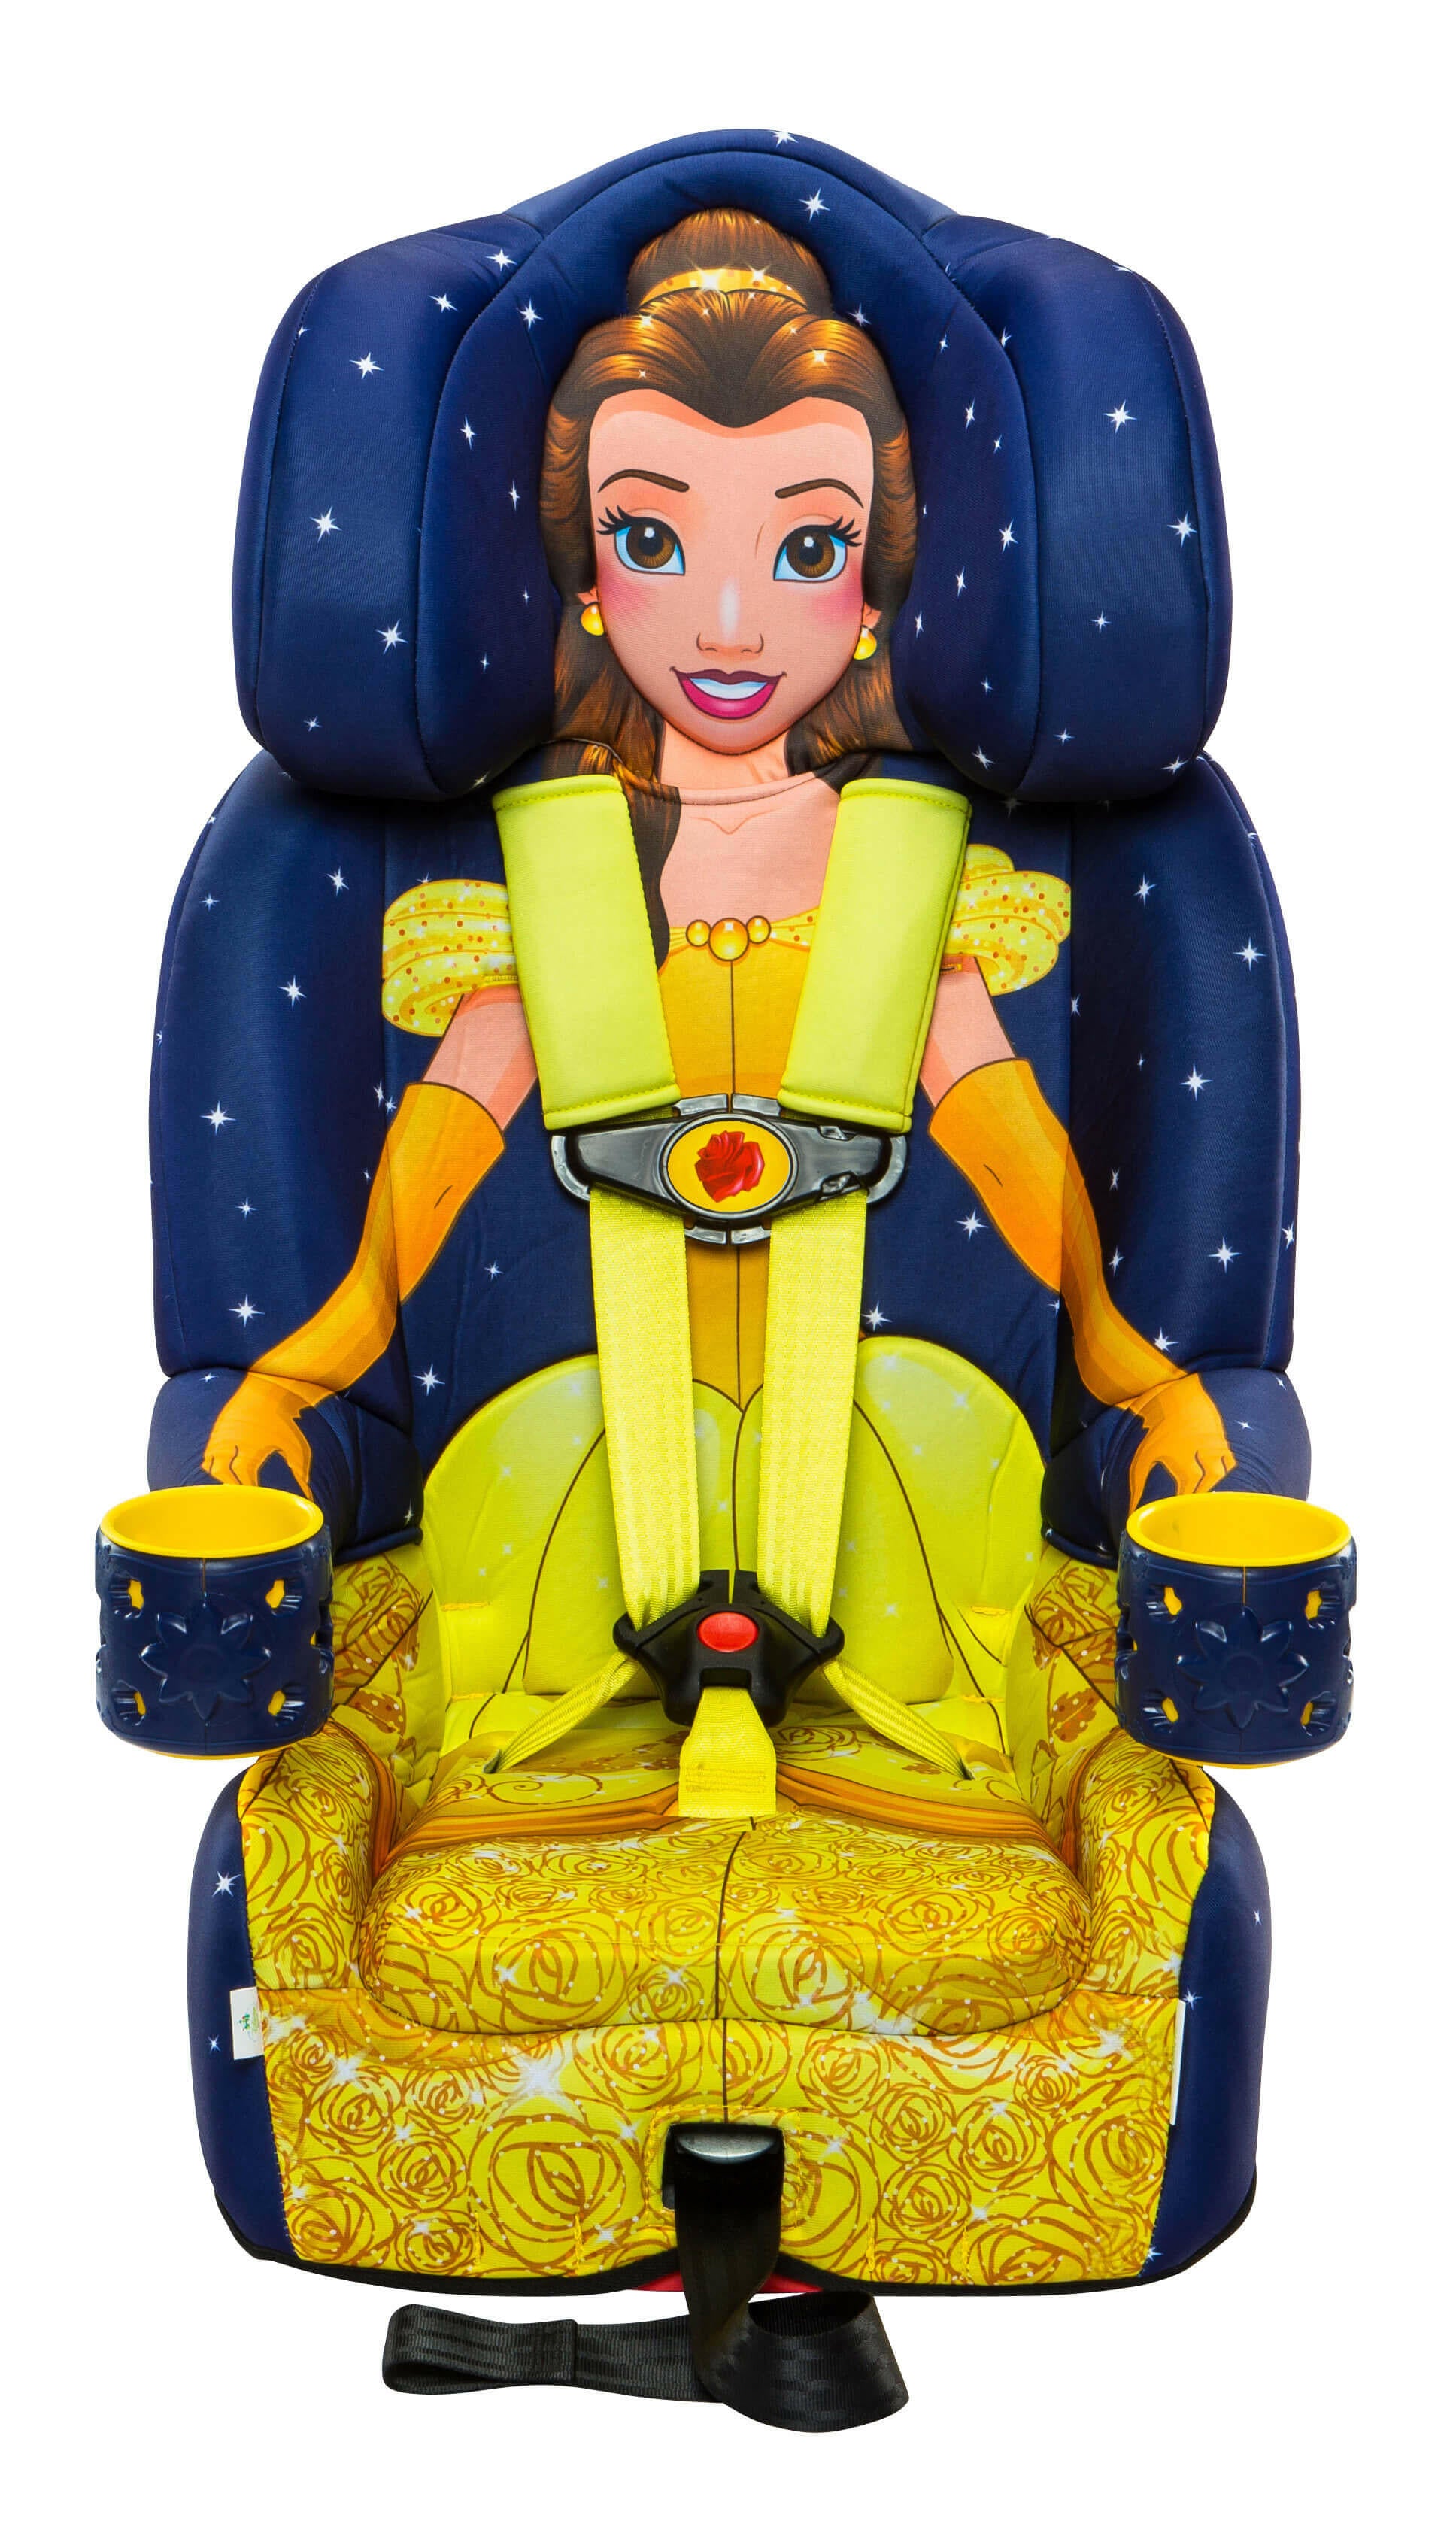 Kids Disney Princess Belle Combination Harness Booster Car Seat - Kids Eye Candy 